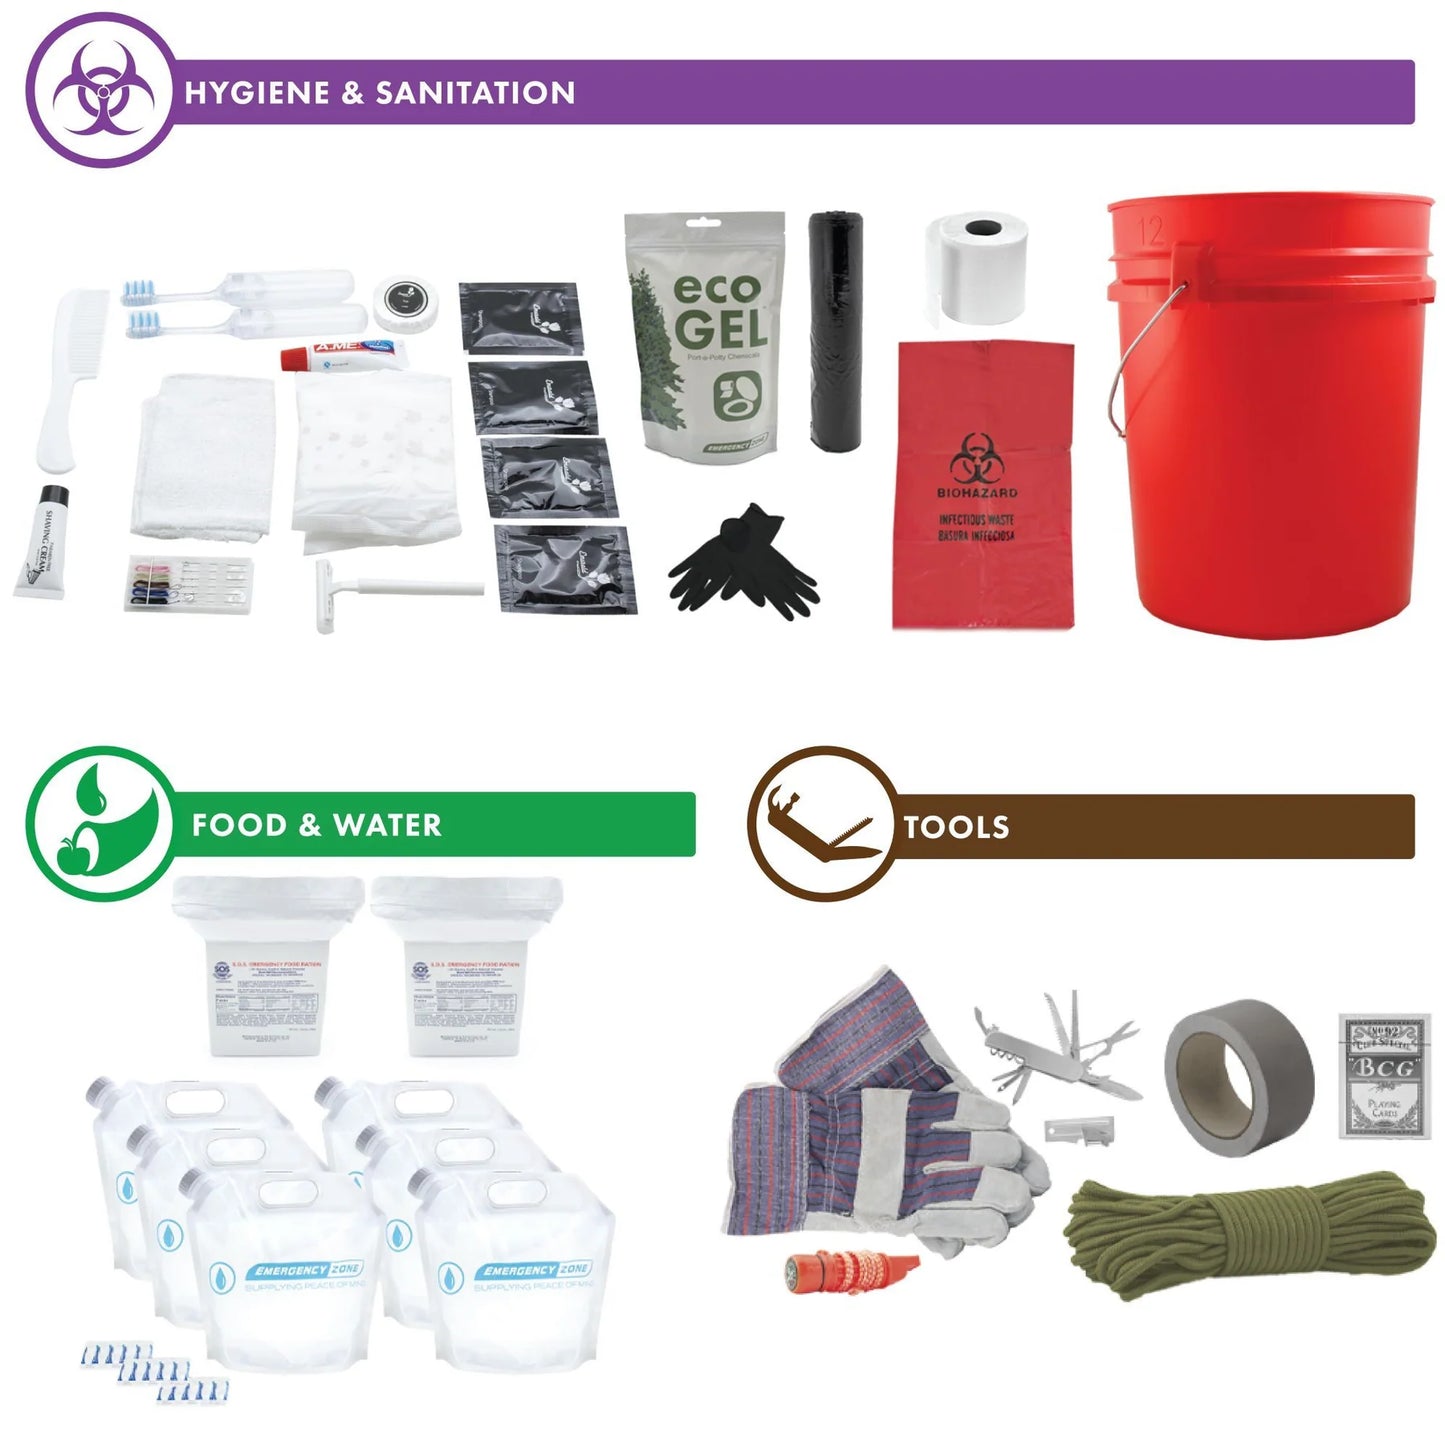 Emergency Zone Hurricane Survival Kit - 2 Person